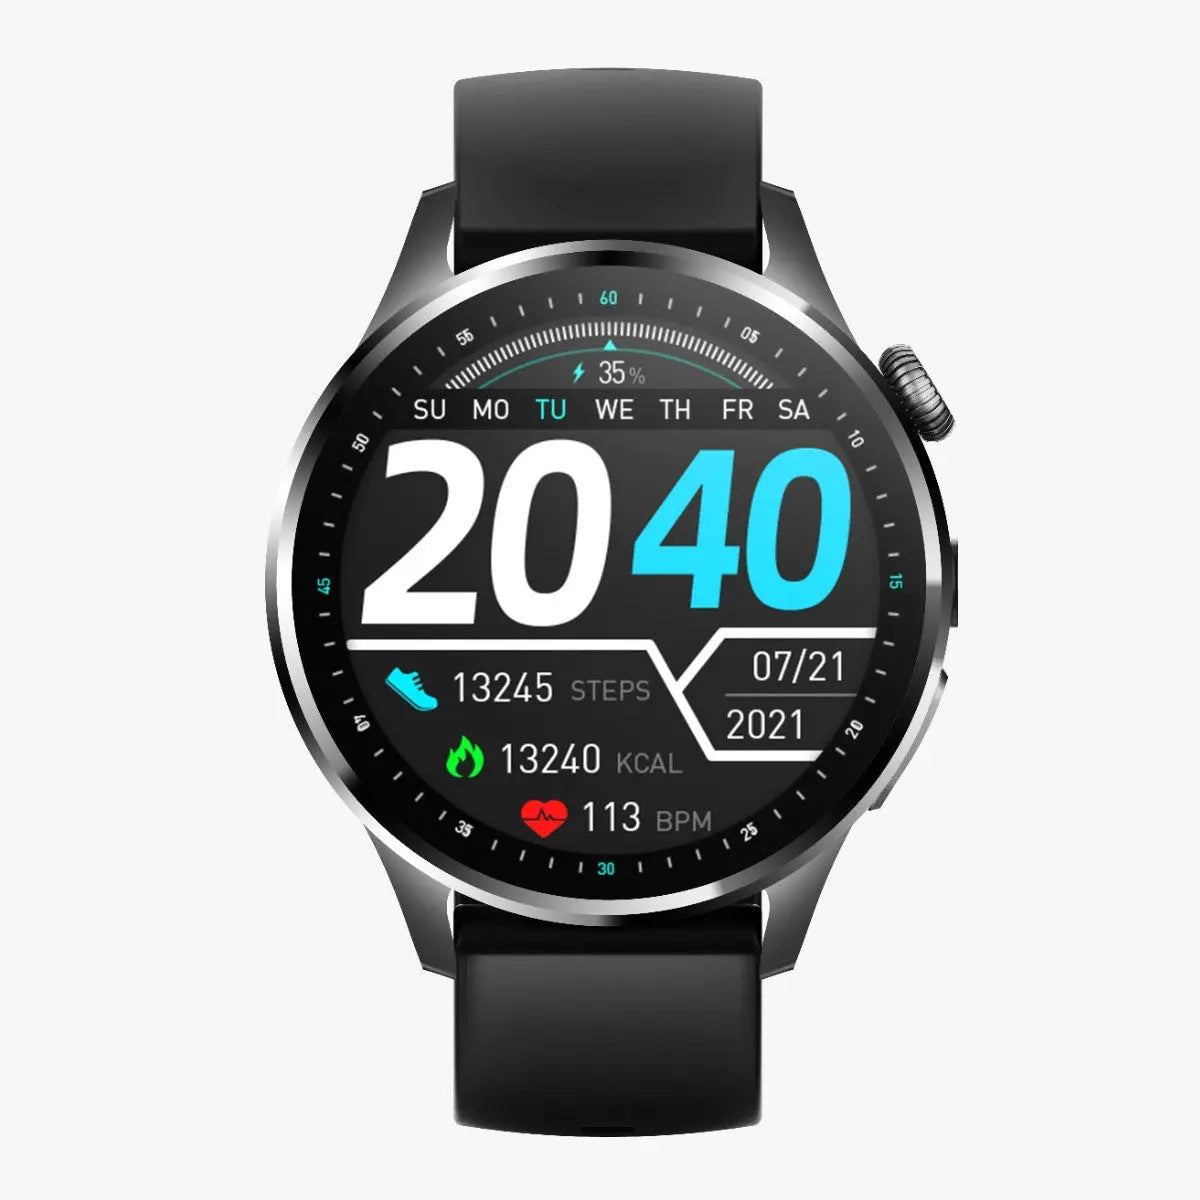 Smartwatch Fralugio X300 Pro Android 8.1, 4GB RAM, 64GB ROM